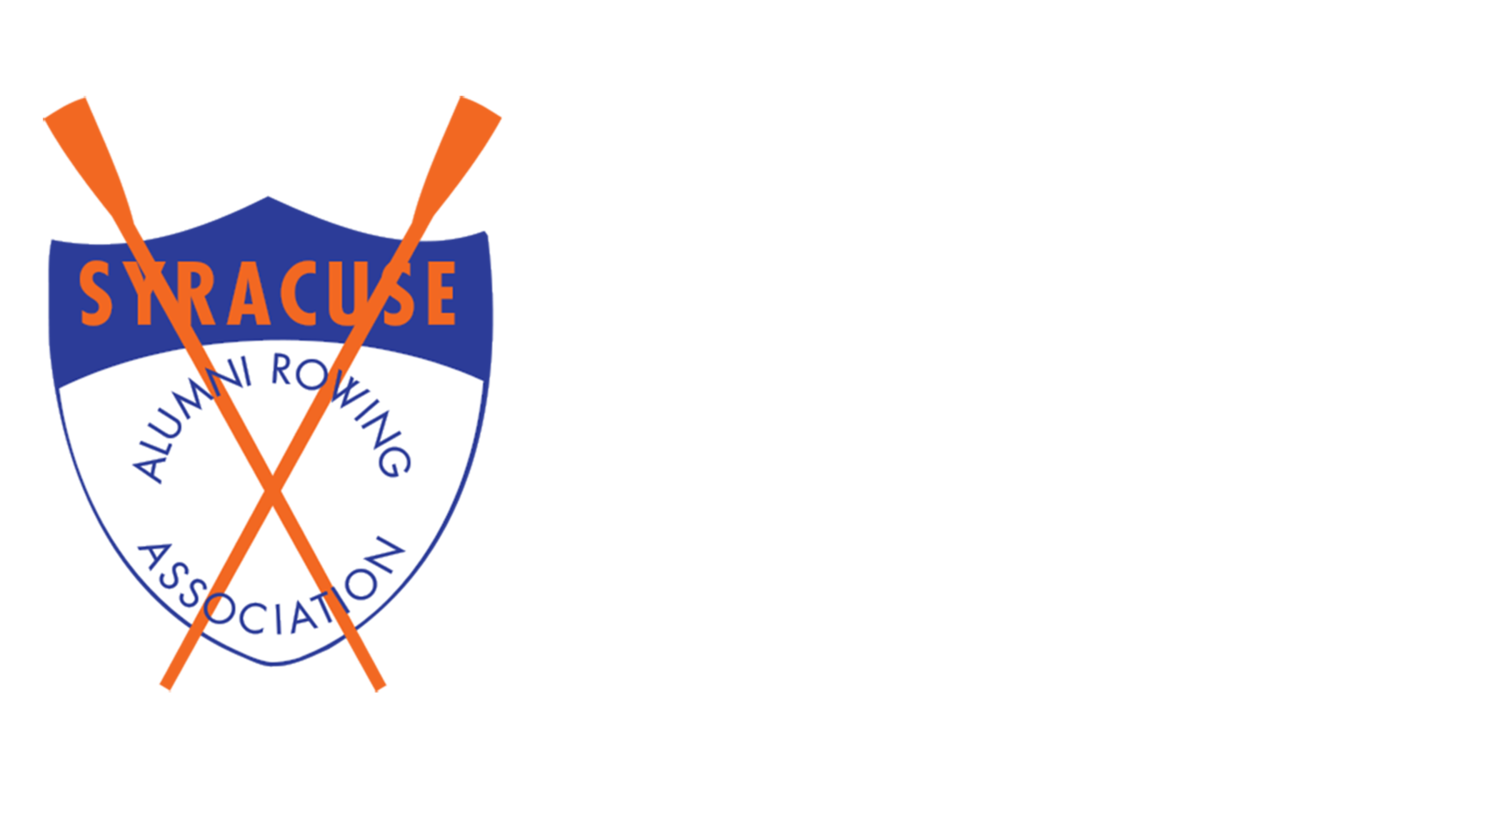 SARA Rowing